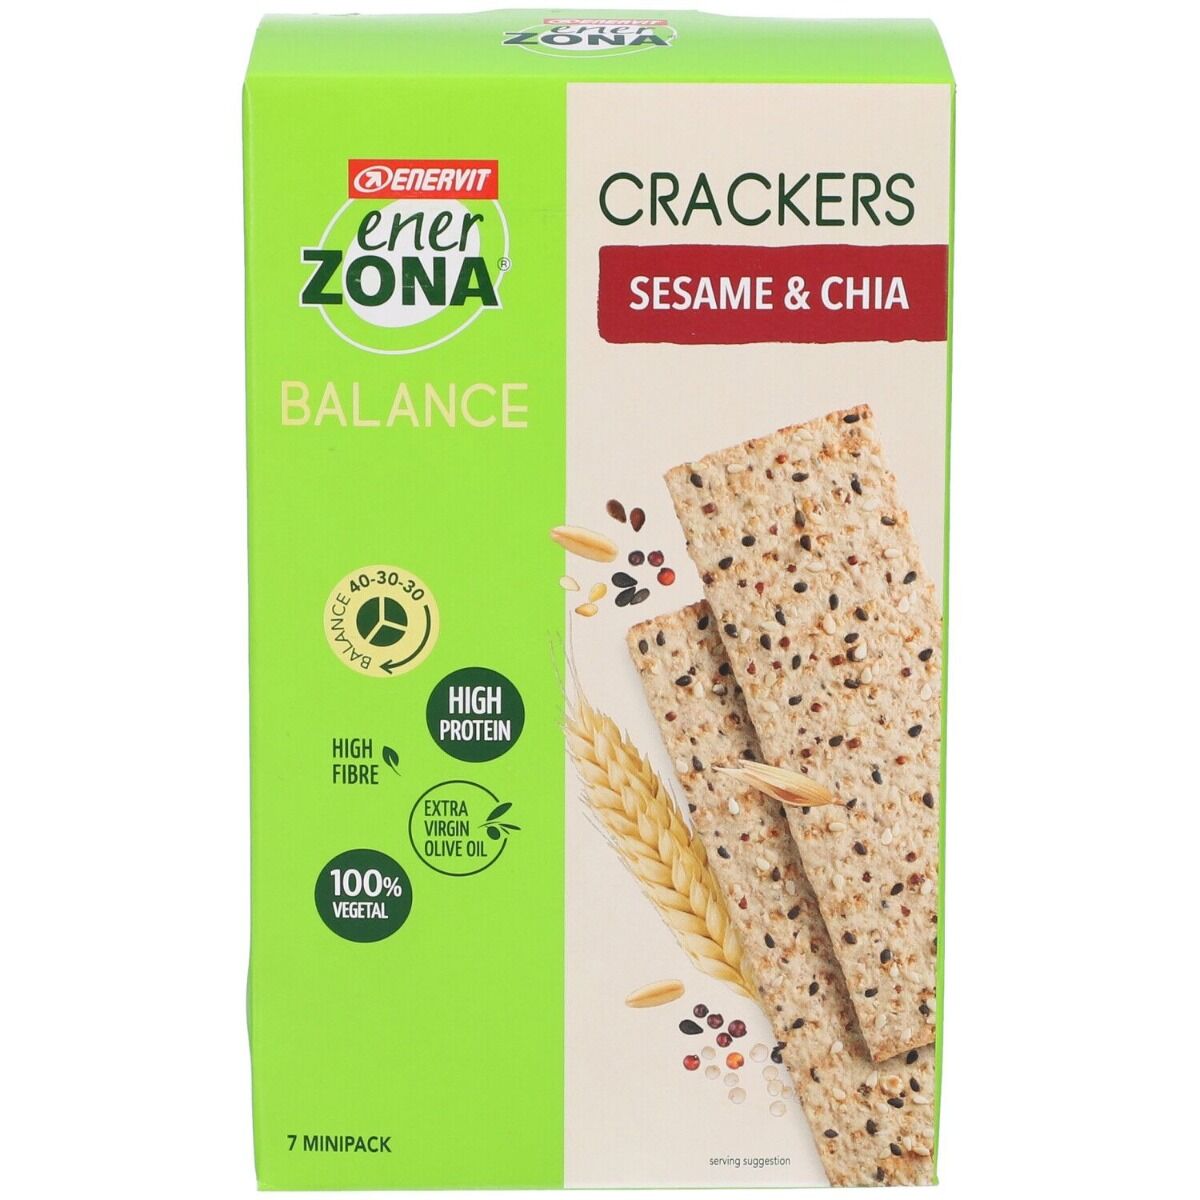 Enervit Enerzona Crackers Sesame & Chia da 7 Minipack 175g